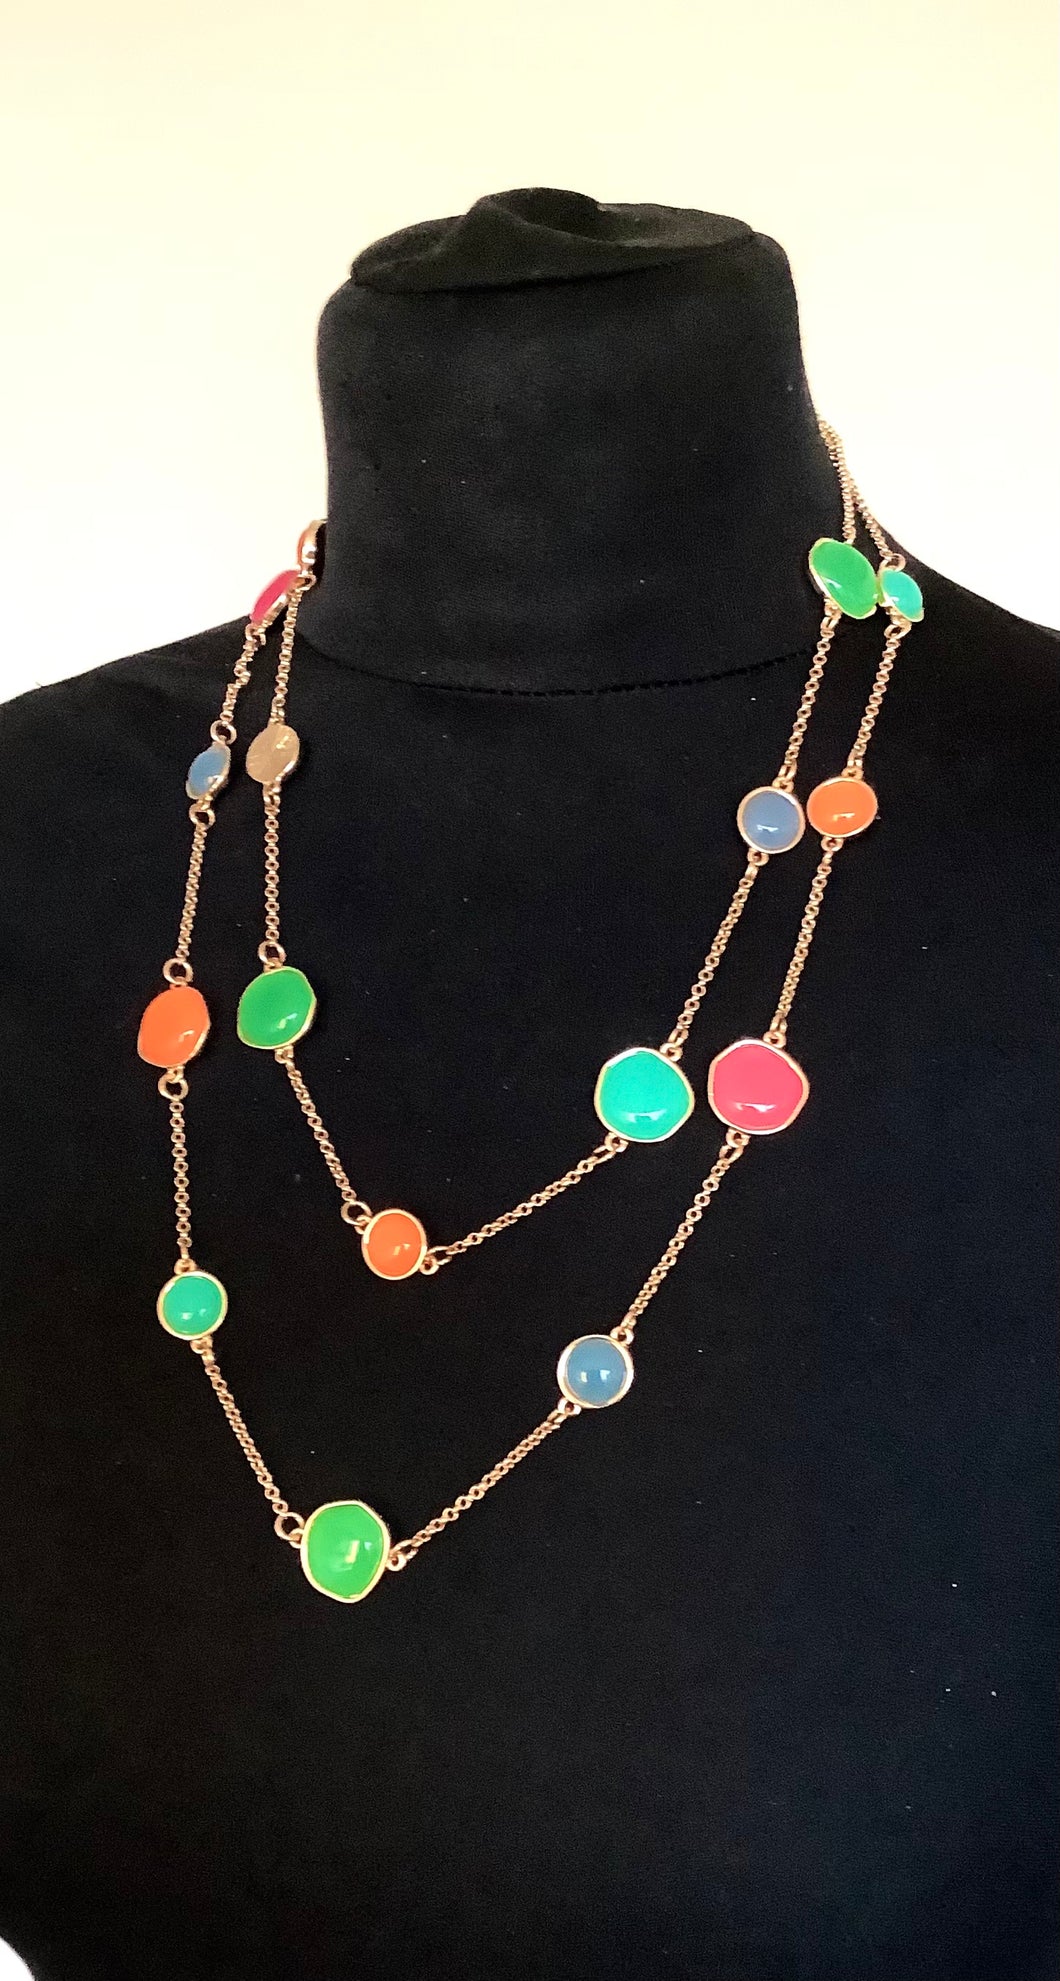 Multi Coloured Delicate Layered Necklace